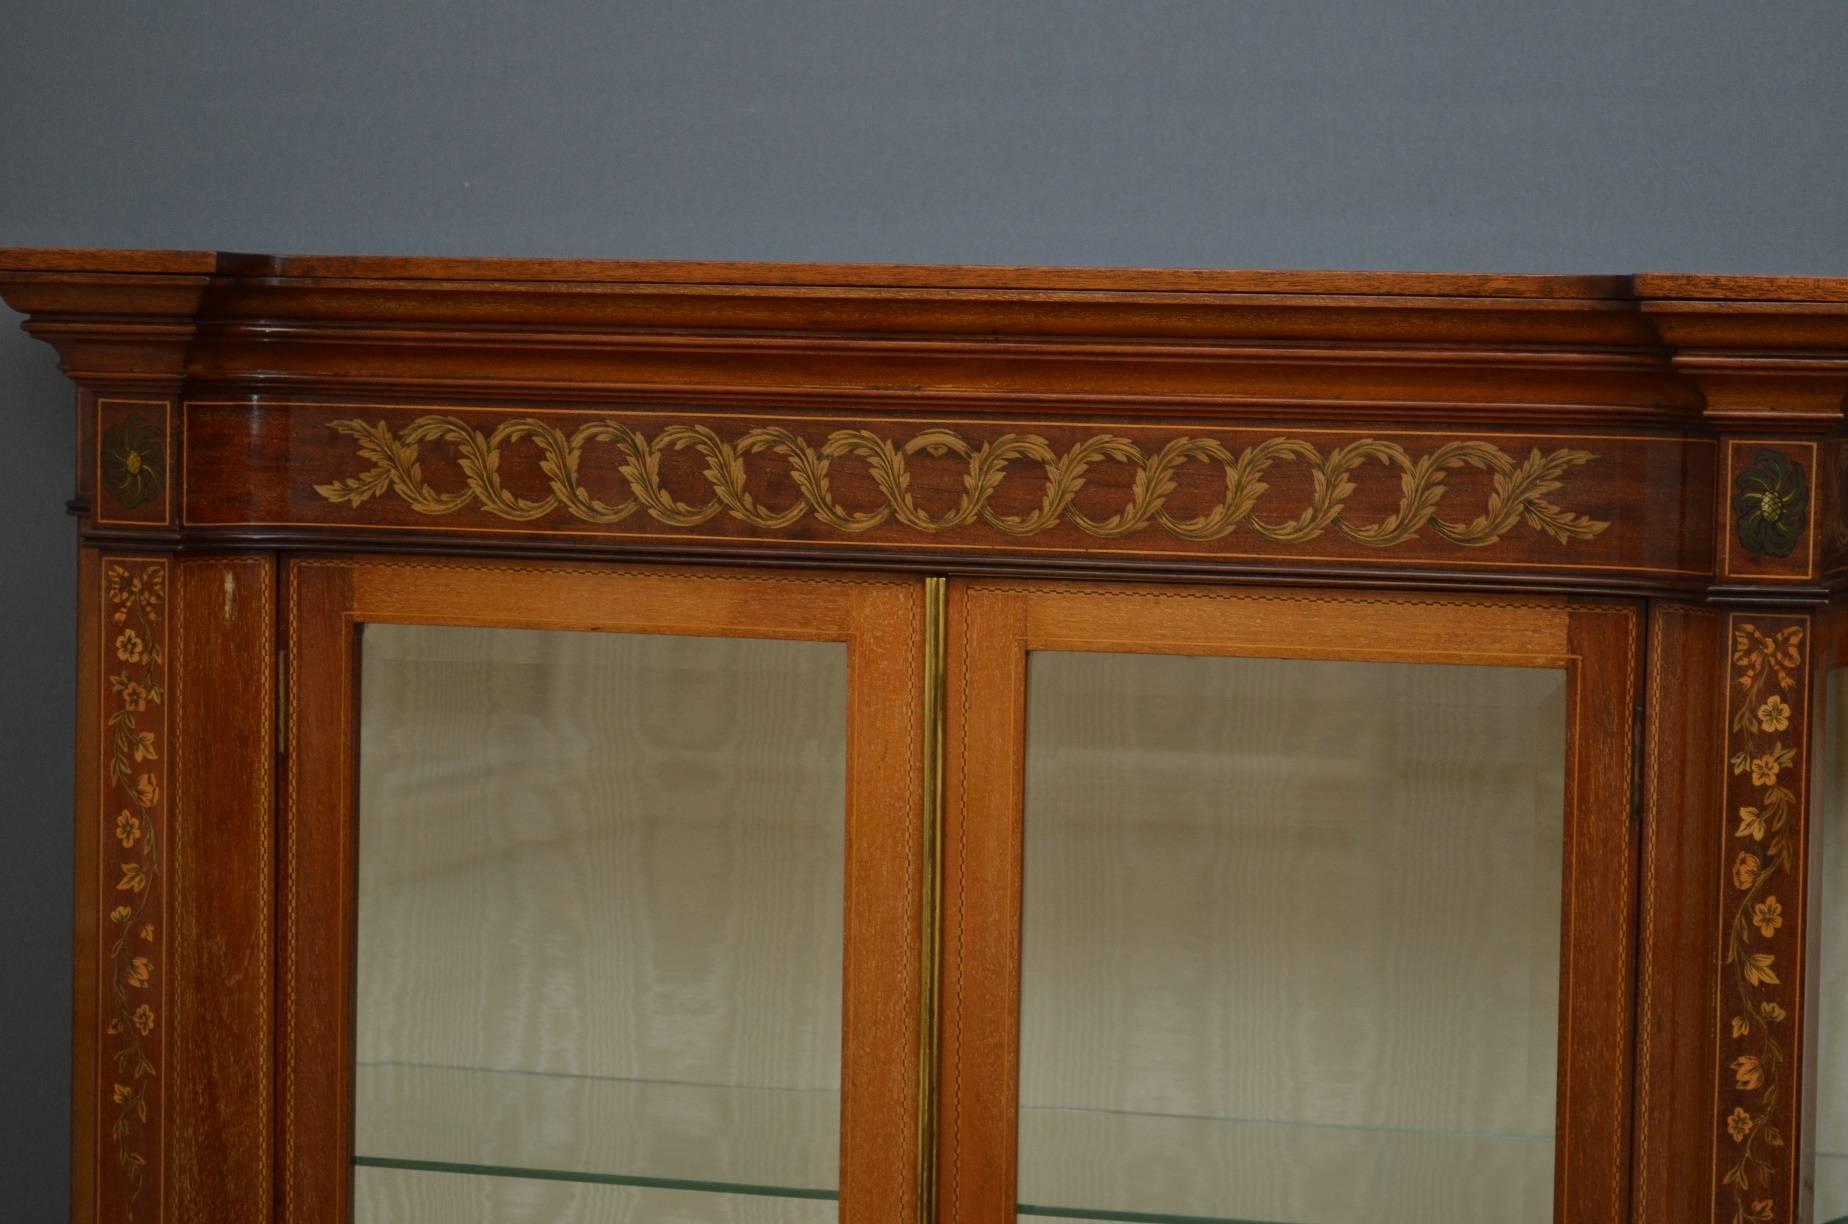 Great Britain (UK) Edwardian Mahogany Low Display Cabinet